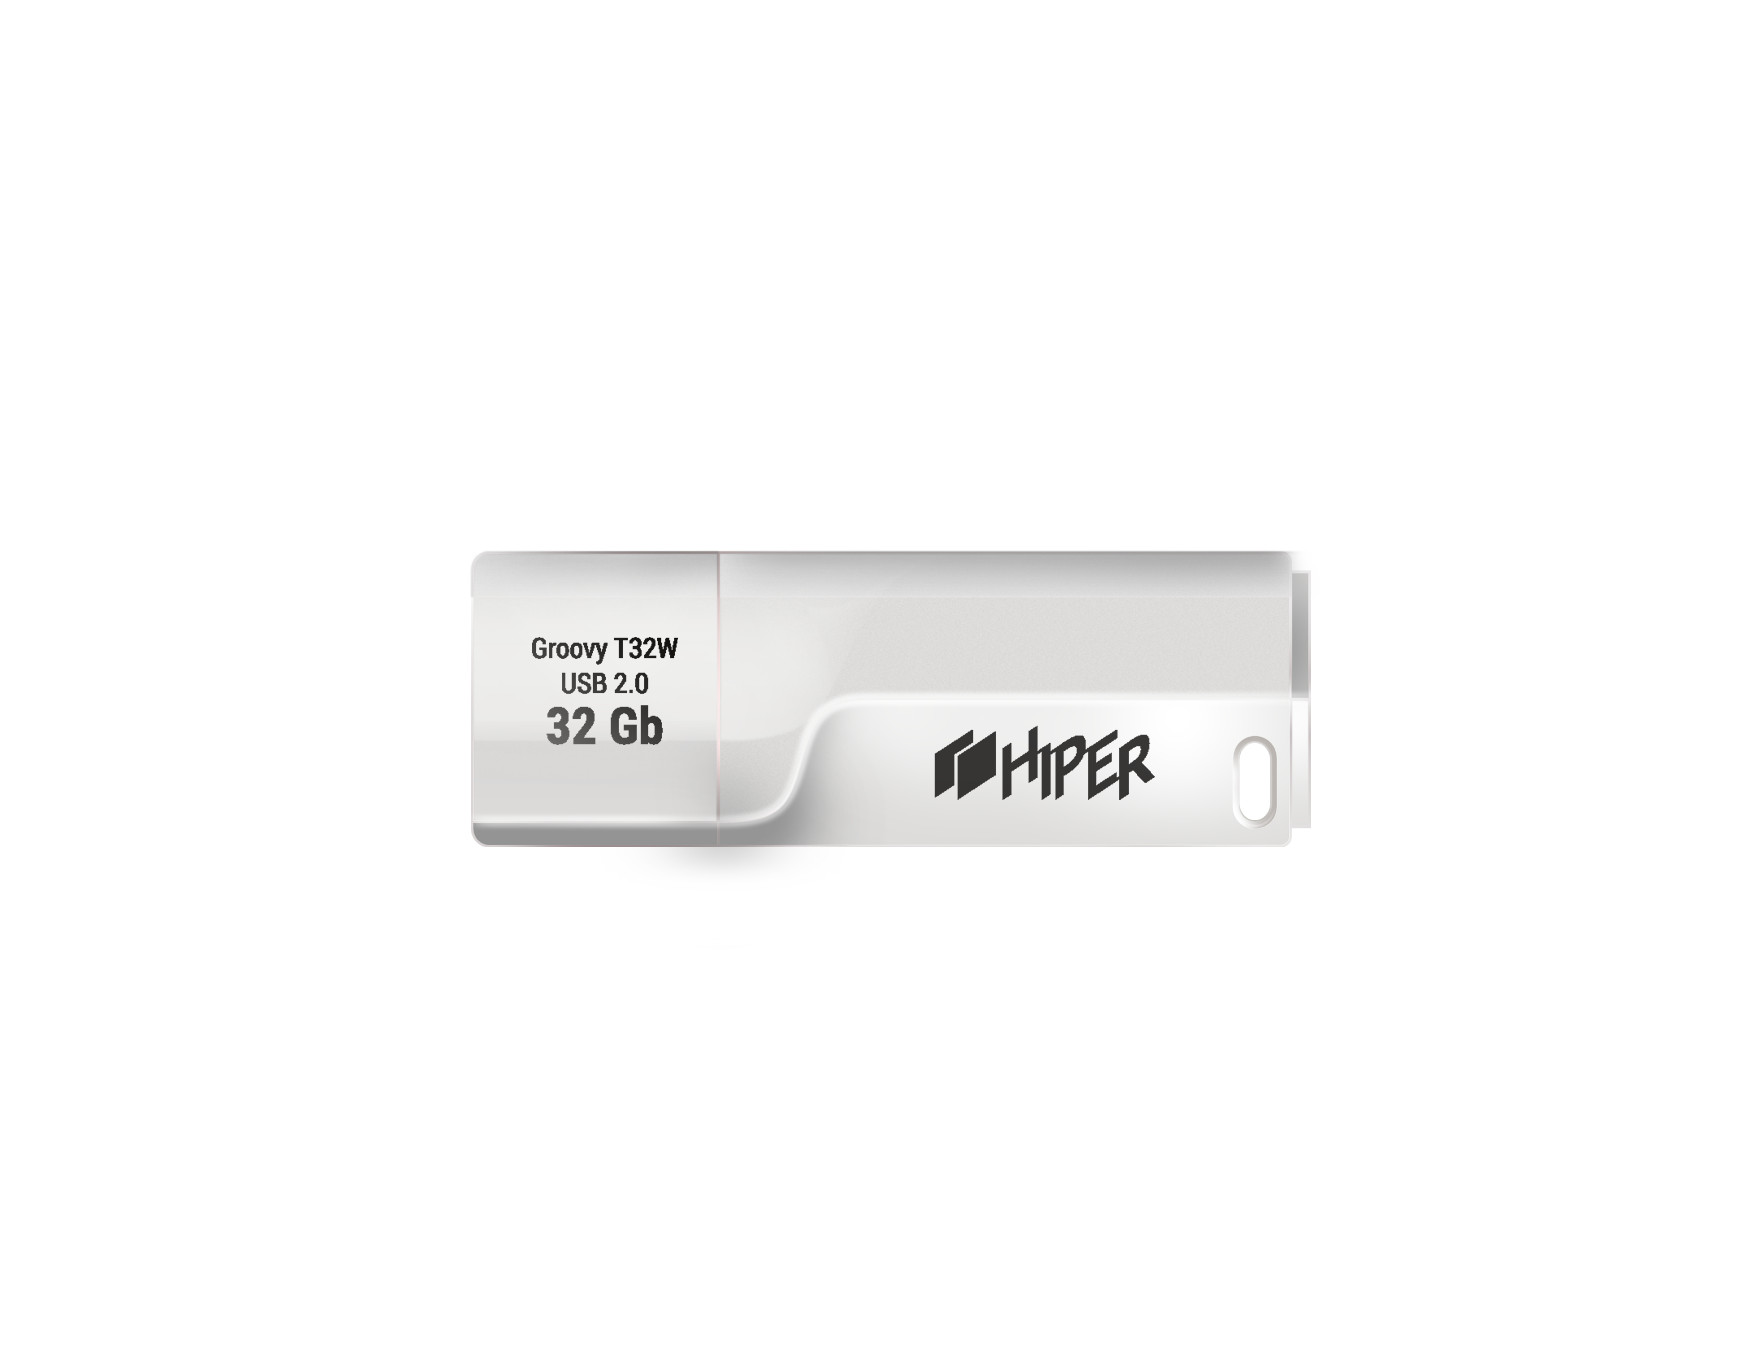 Флешка 32Gb USB 2.0 Hiper Groovy T32W, белый (HI-USB232GBTW)